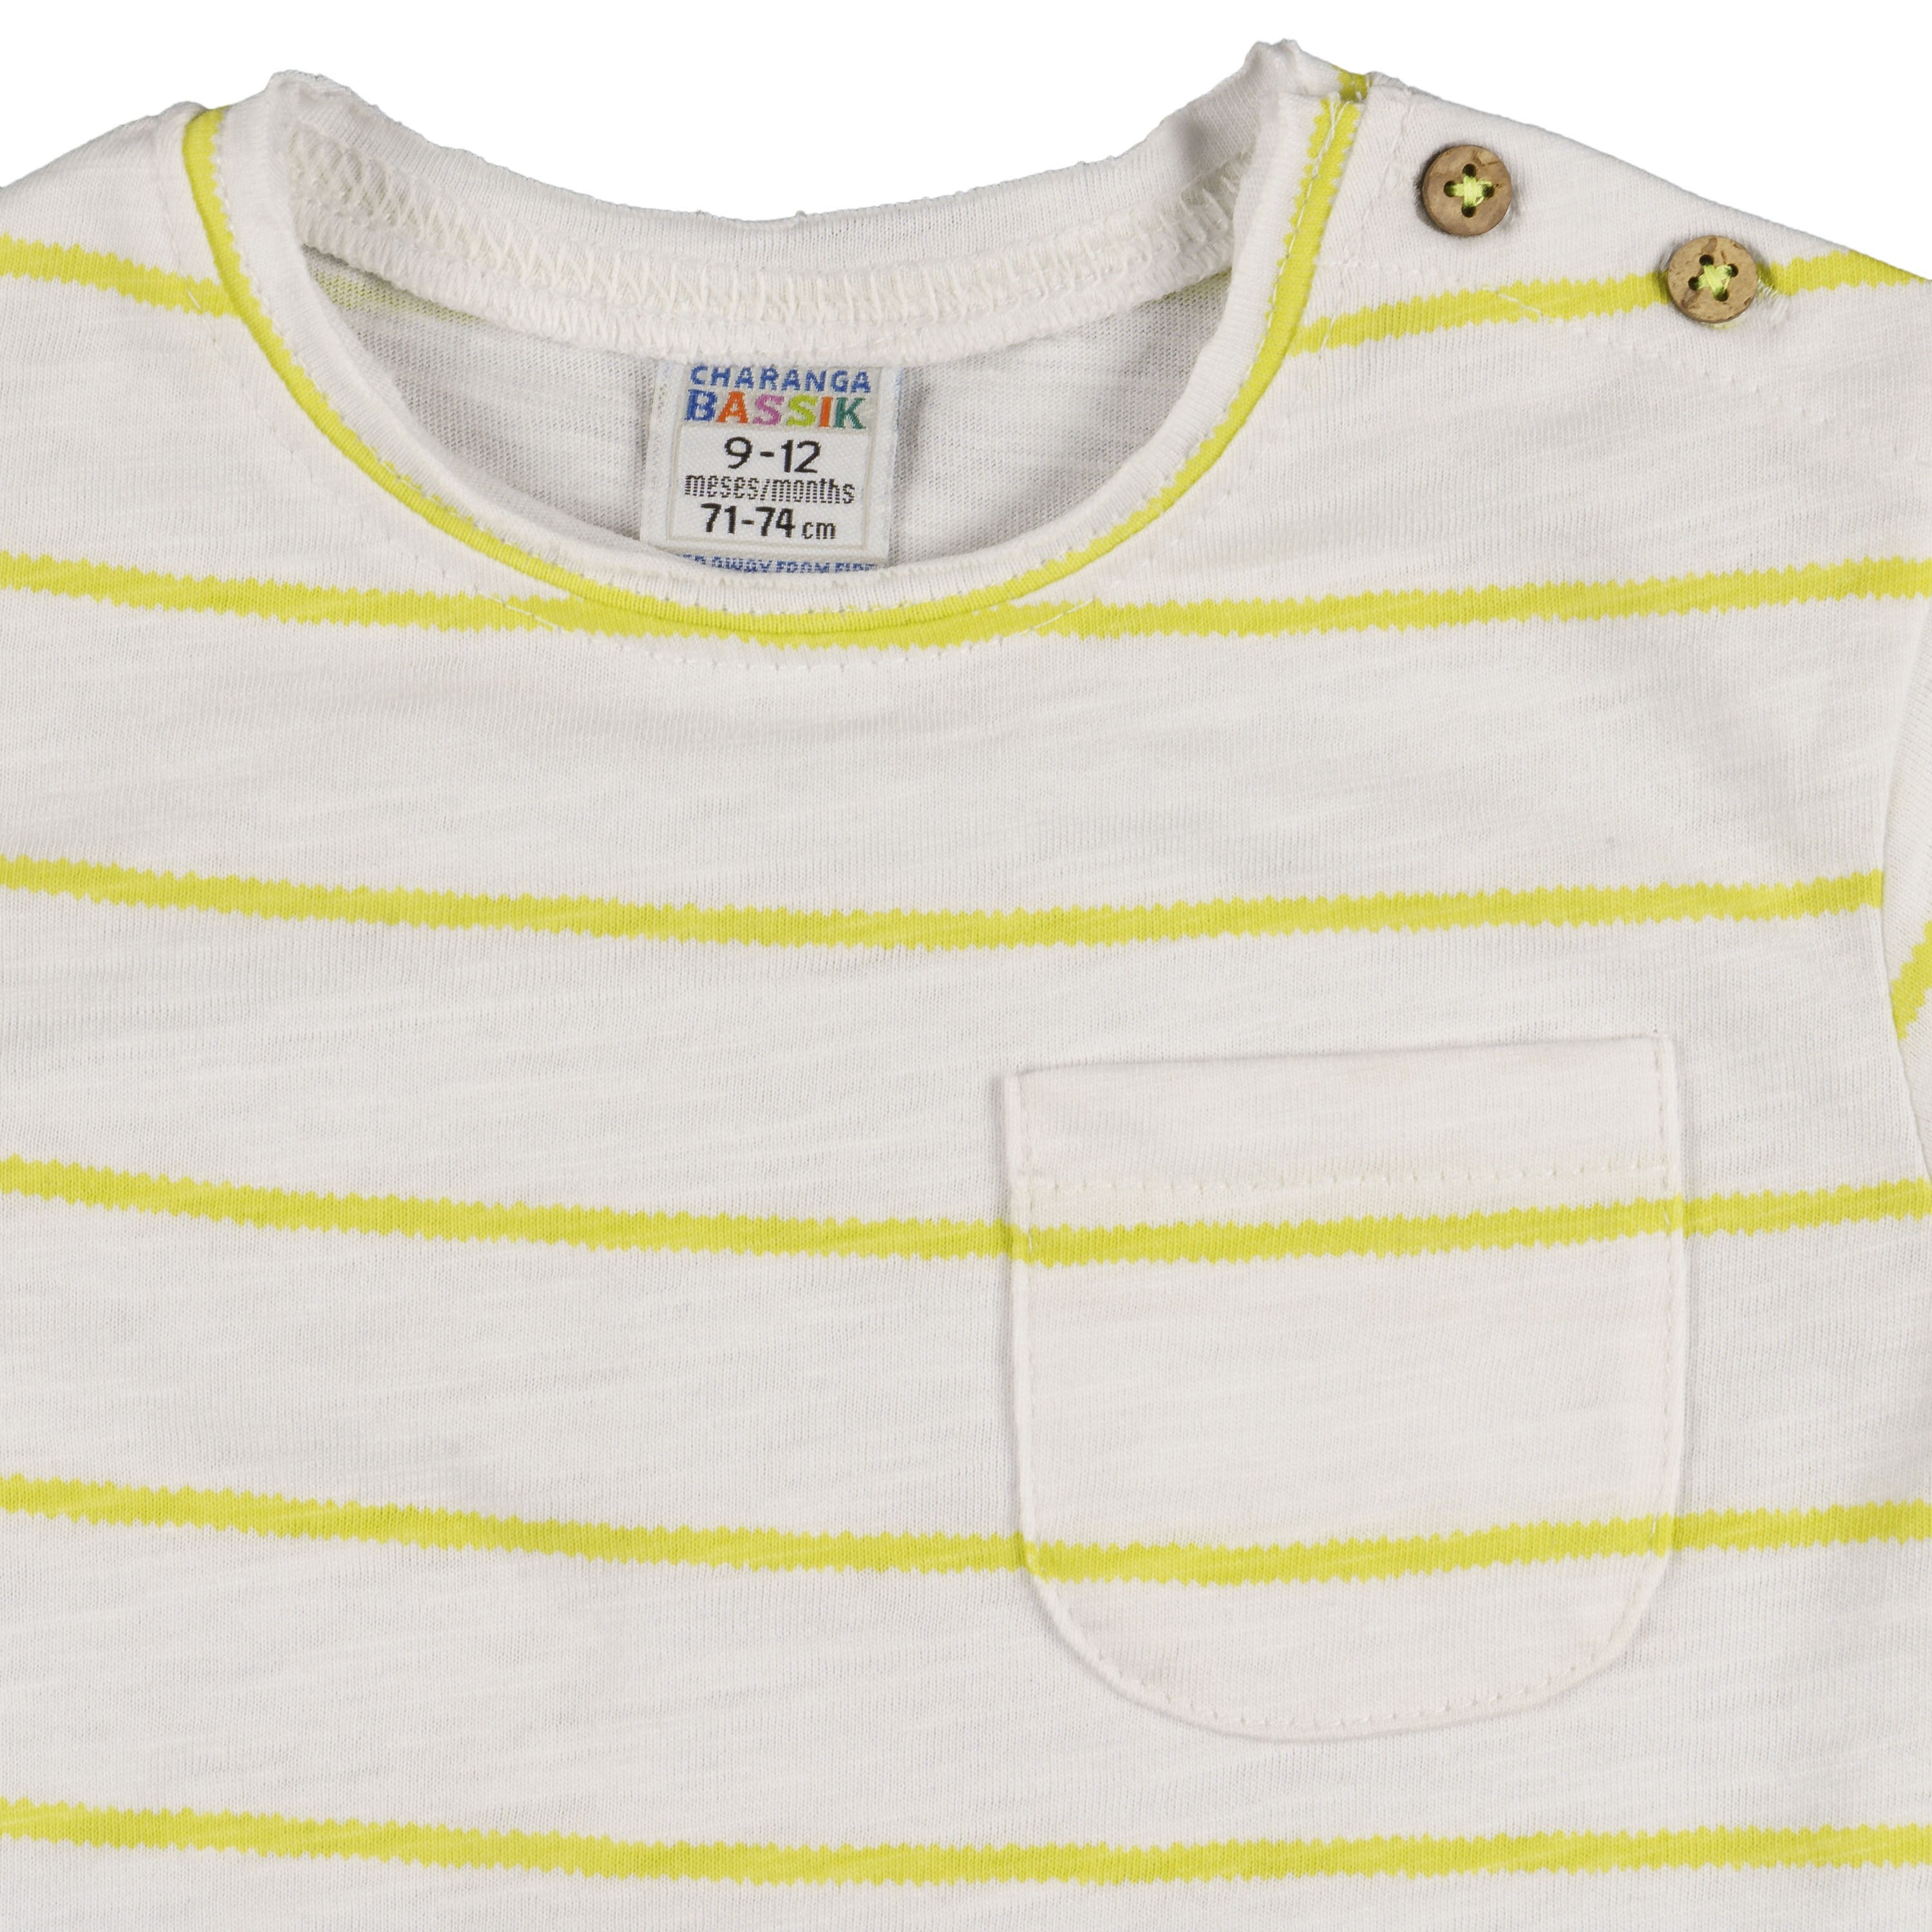 Camiseta de bebé amarillo VERANO/Outlet